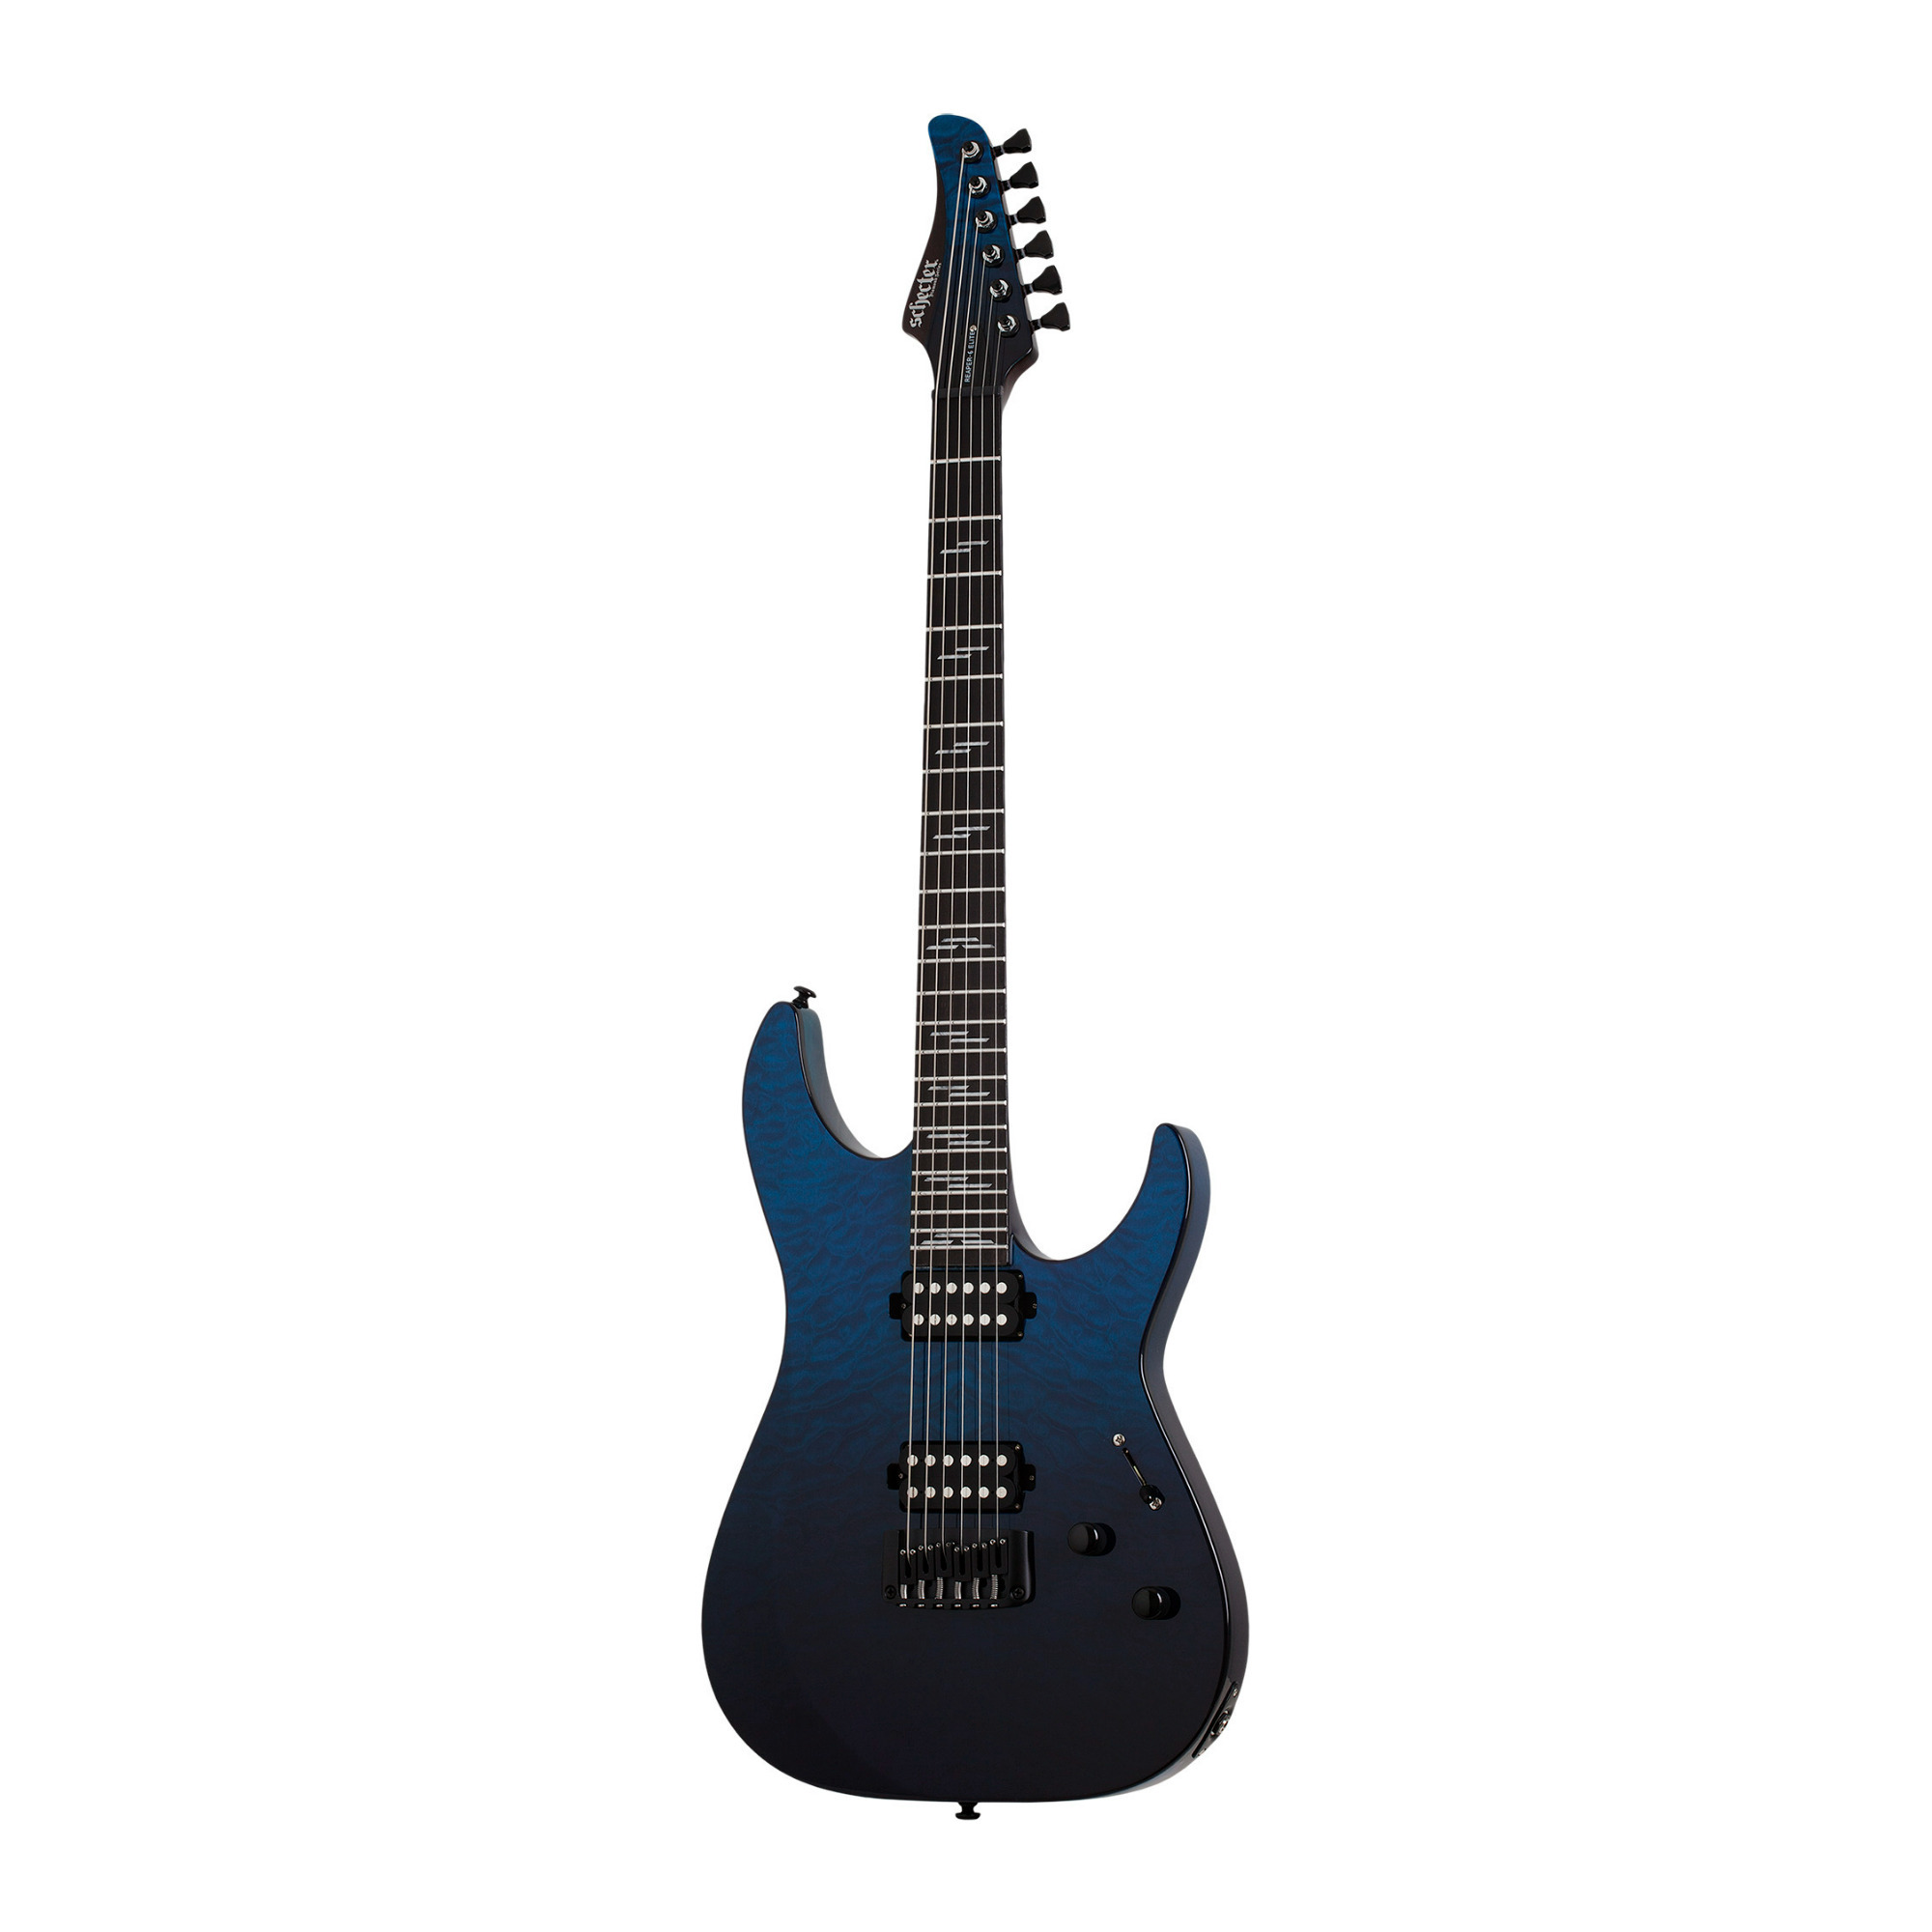 Schecter Reaper-6 6-String Electric Guitar with Ebony Fretboard (Deep Ocean Blue) -  SGR-2186